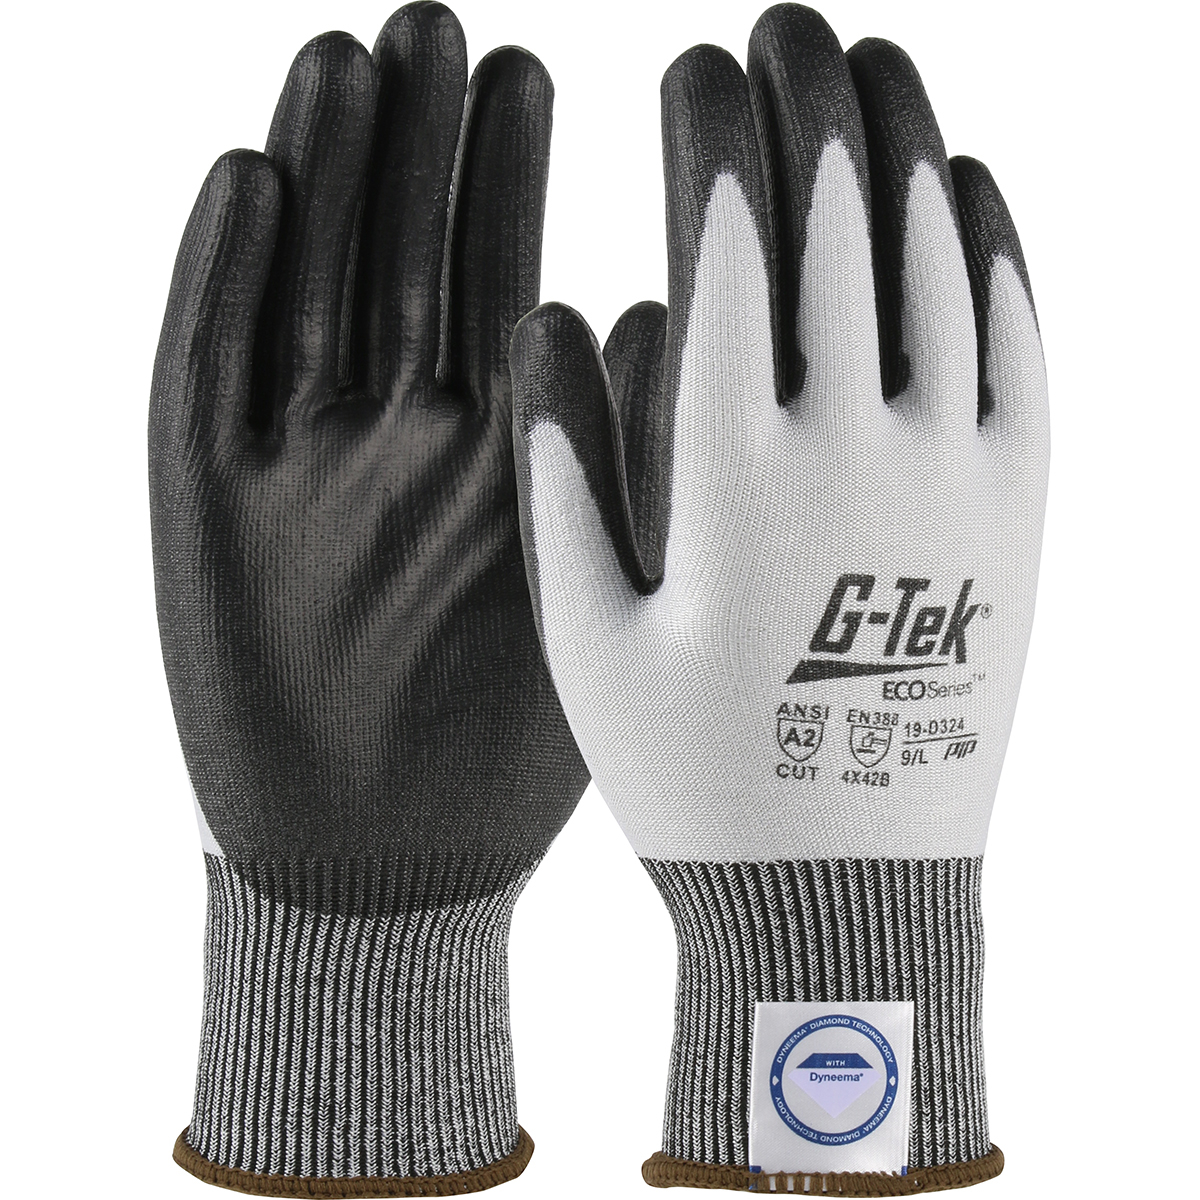 19-D324 PIP®G-Tek®ECO系列™无缝针织Dyneema®凤凰混纺手套，手掌和手指上有聚氨酯涂层平握把